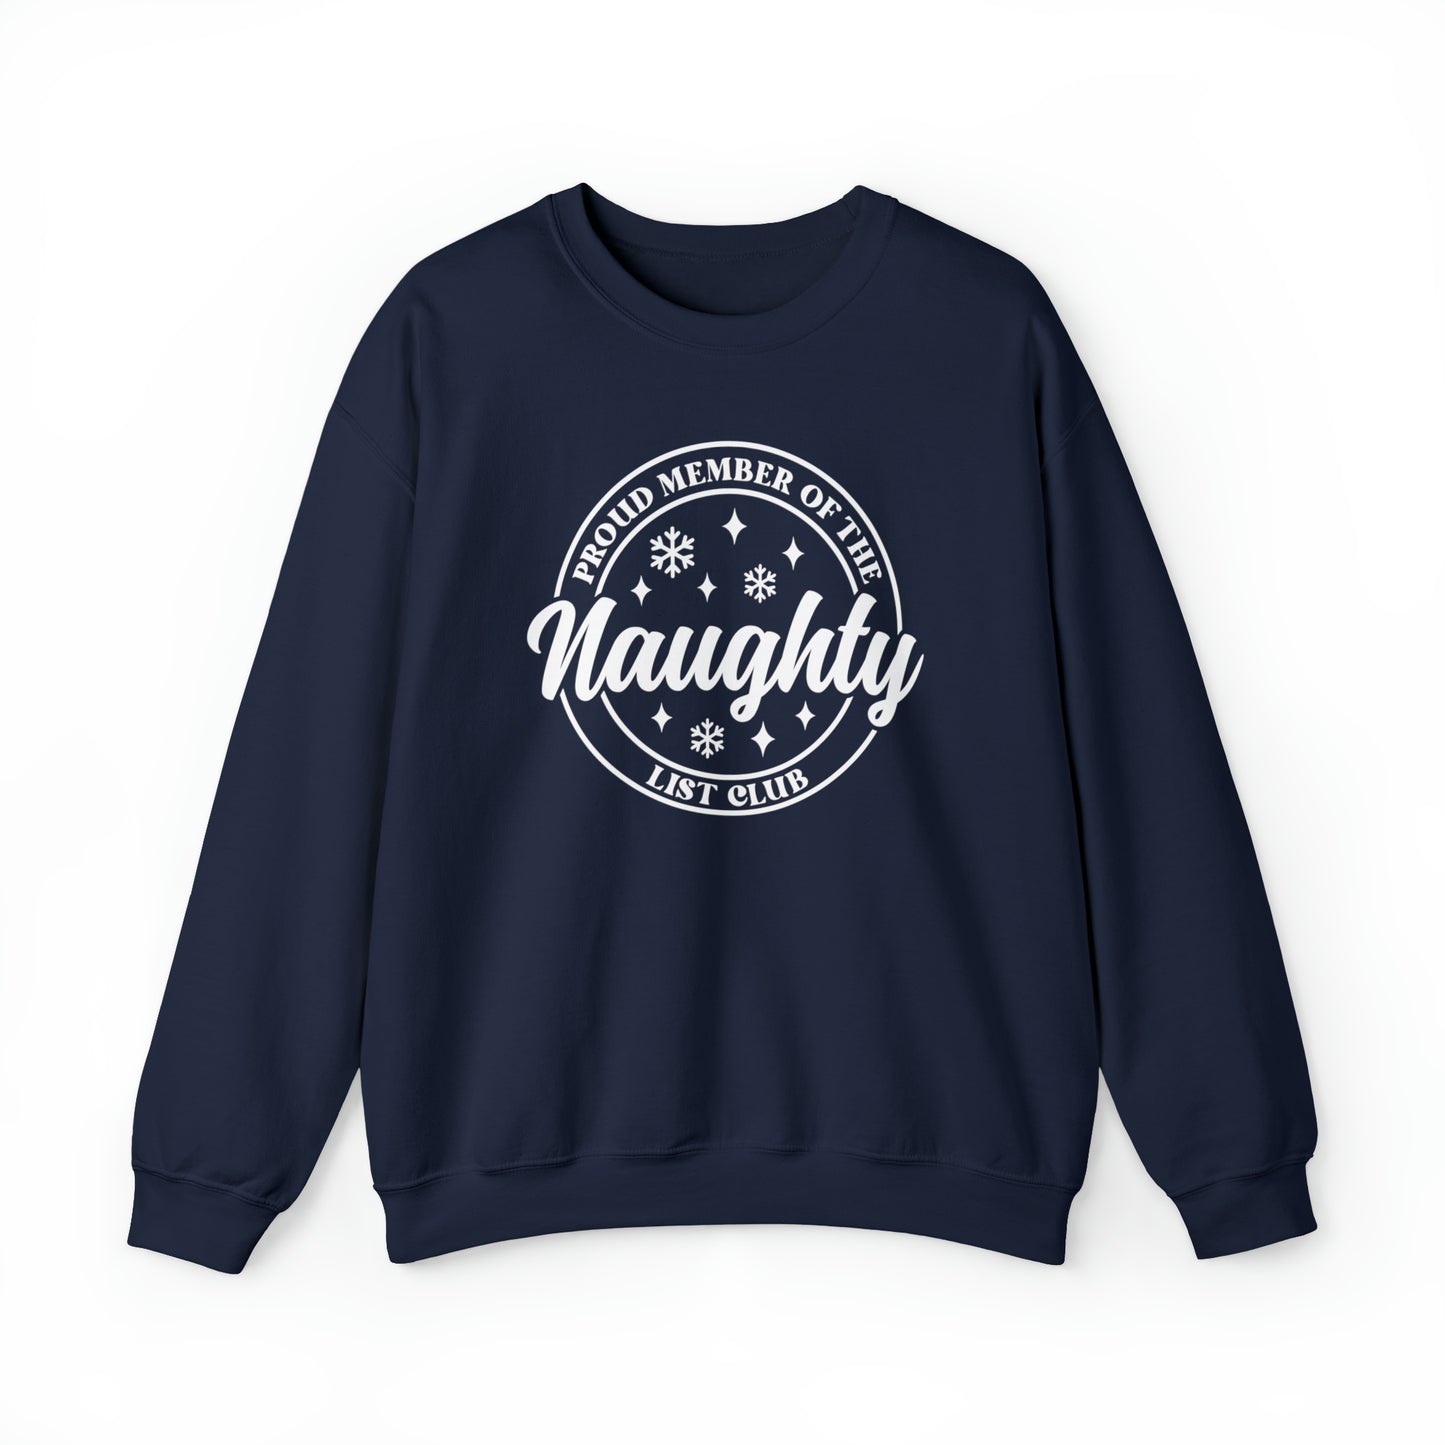 Proud Member of the Naughty List Club Christmas Crewneck Sweater